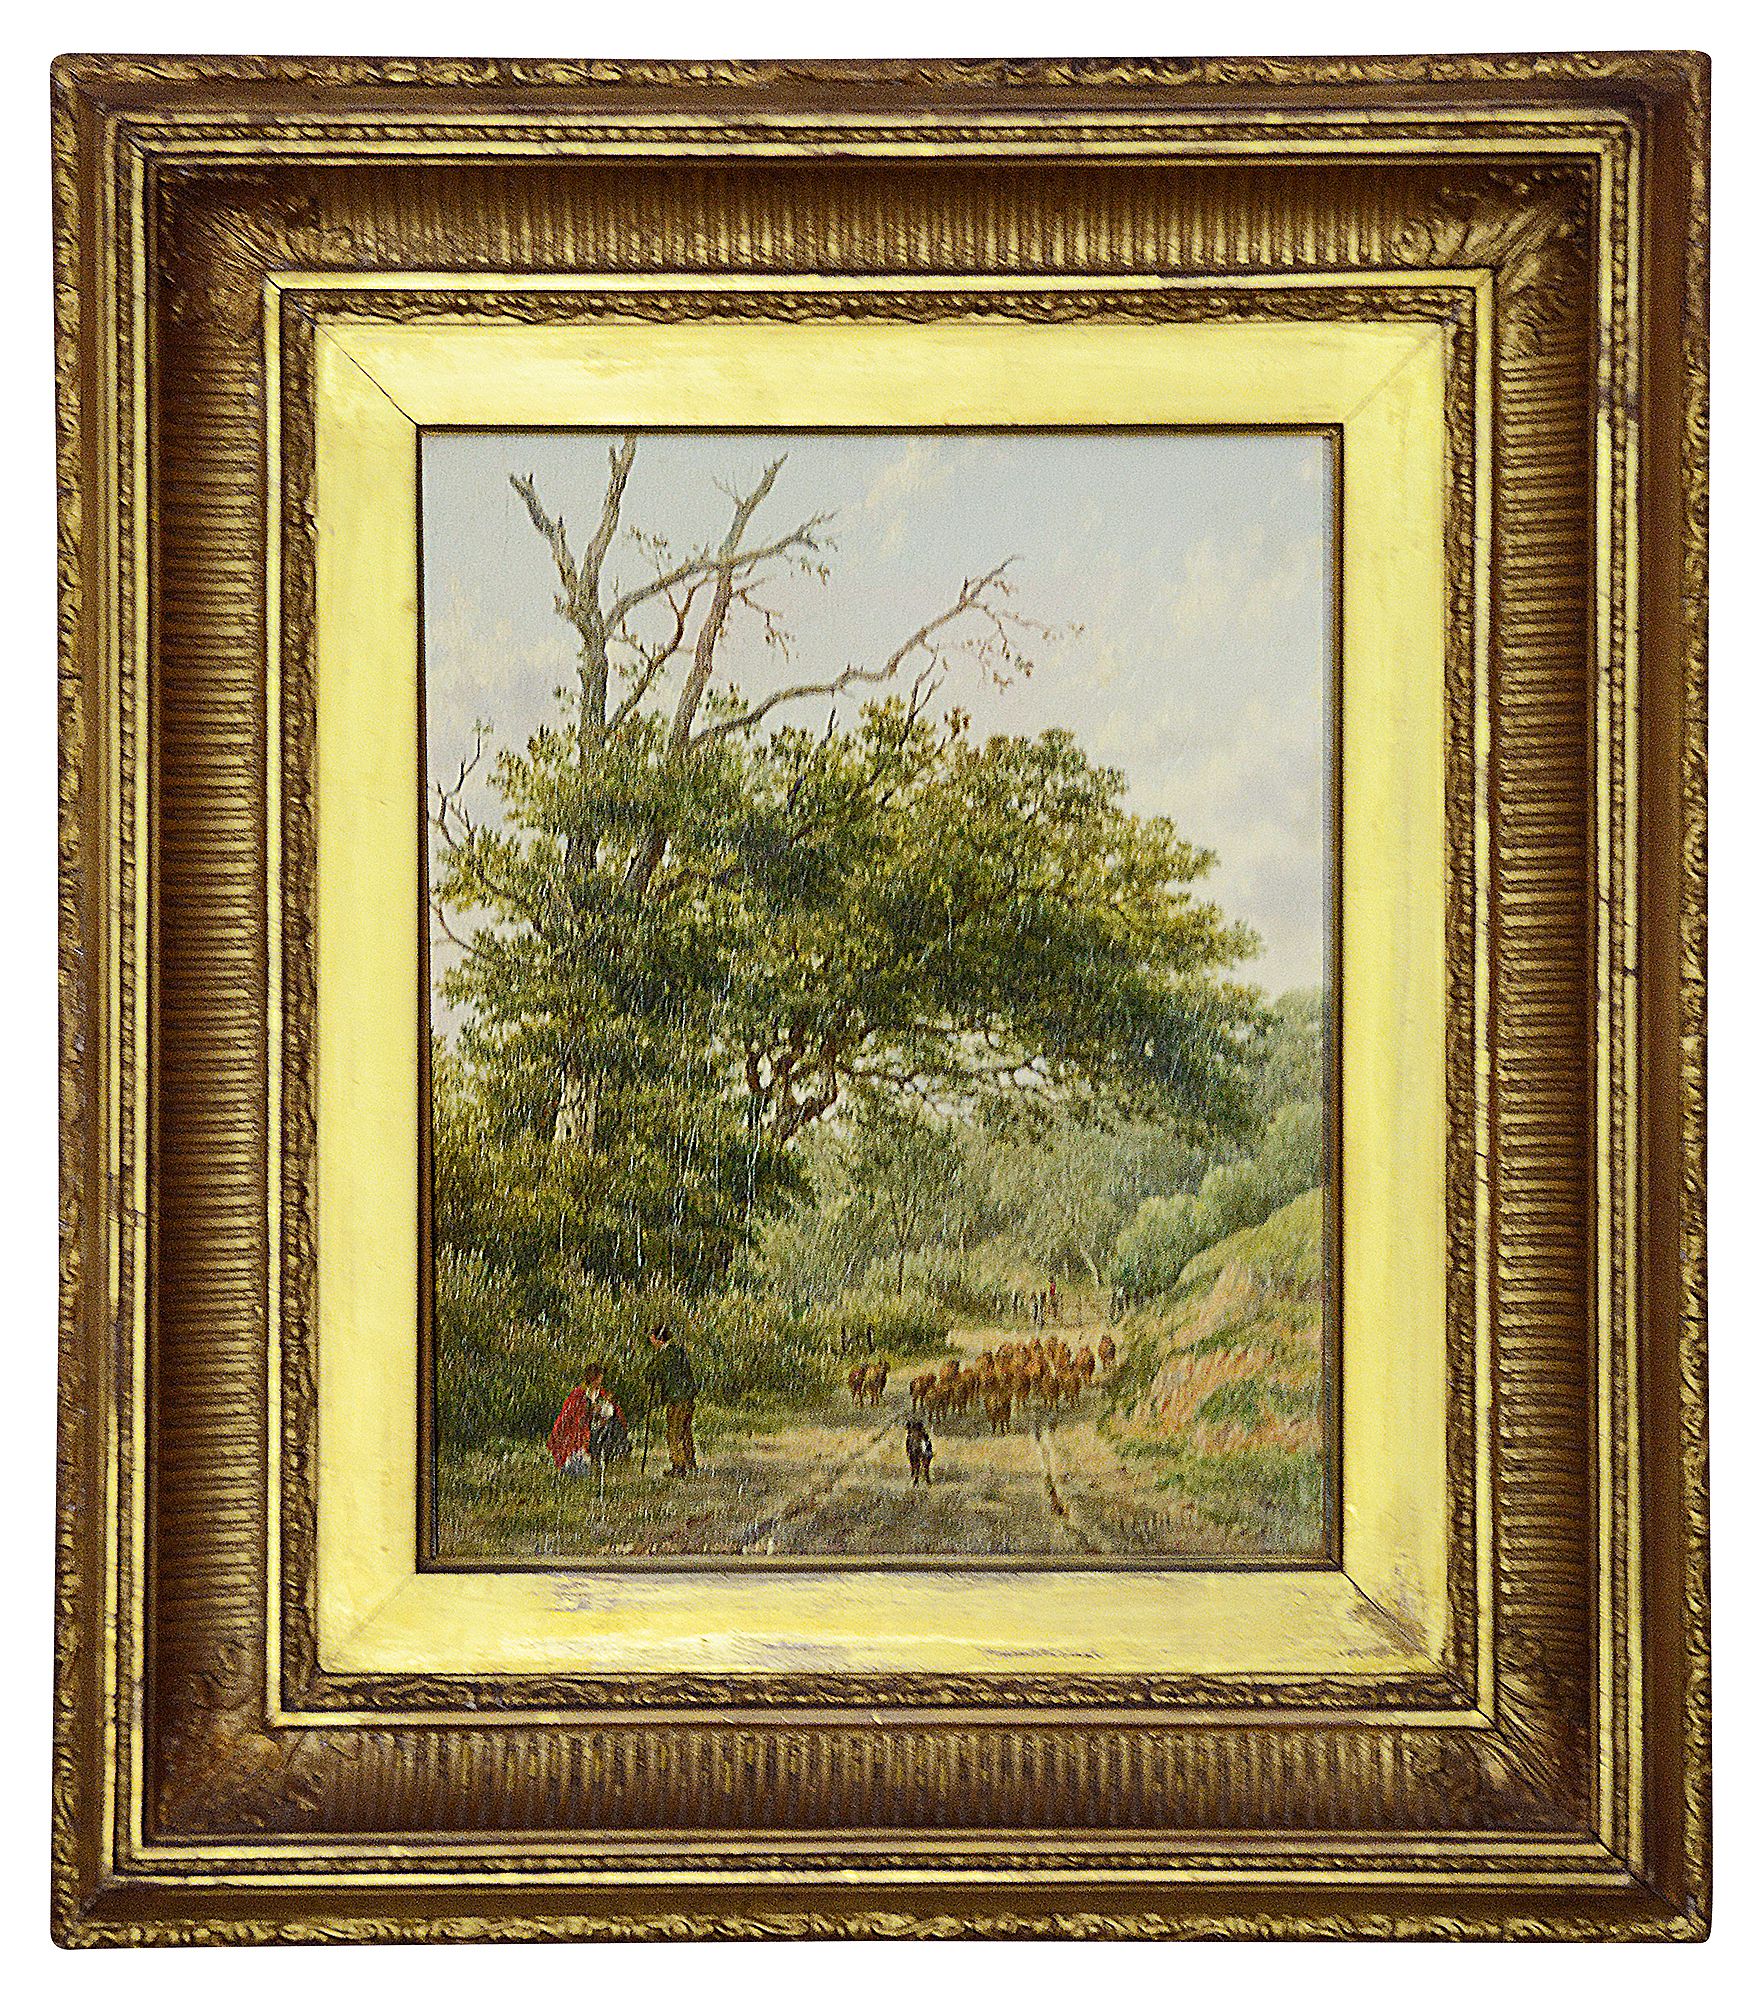 Julius Godet (British., fl.1844-1884) 'Flock of sheep' oil on canvas